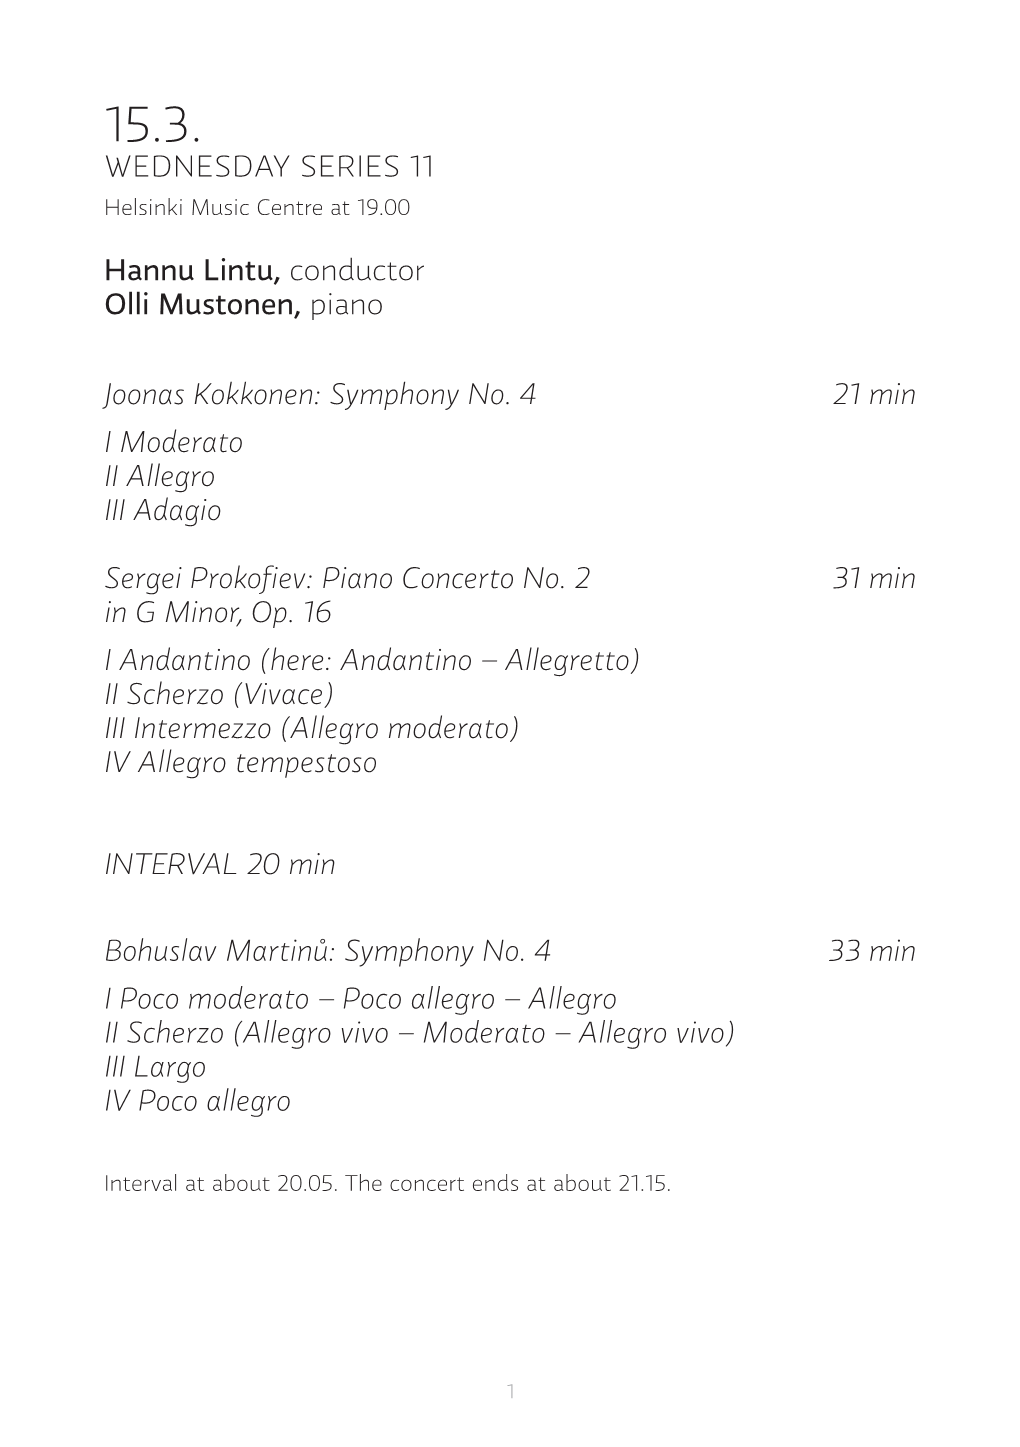 WEDNESDAY SERIES 11 Hannu Lintu, Conductor Olli